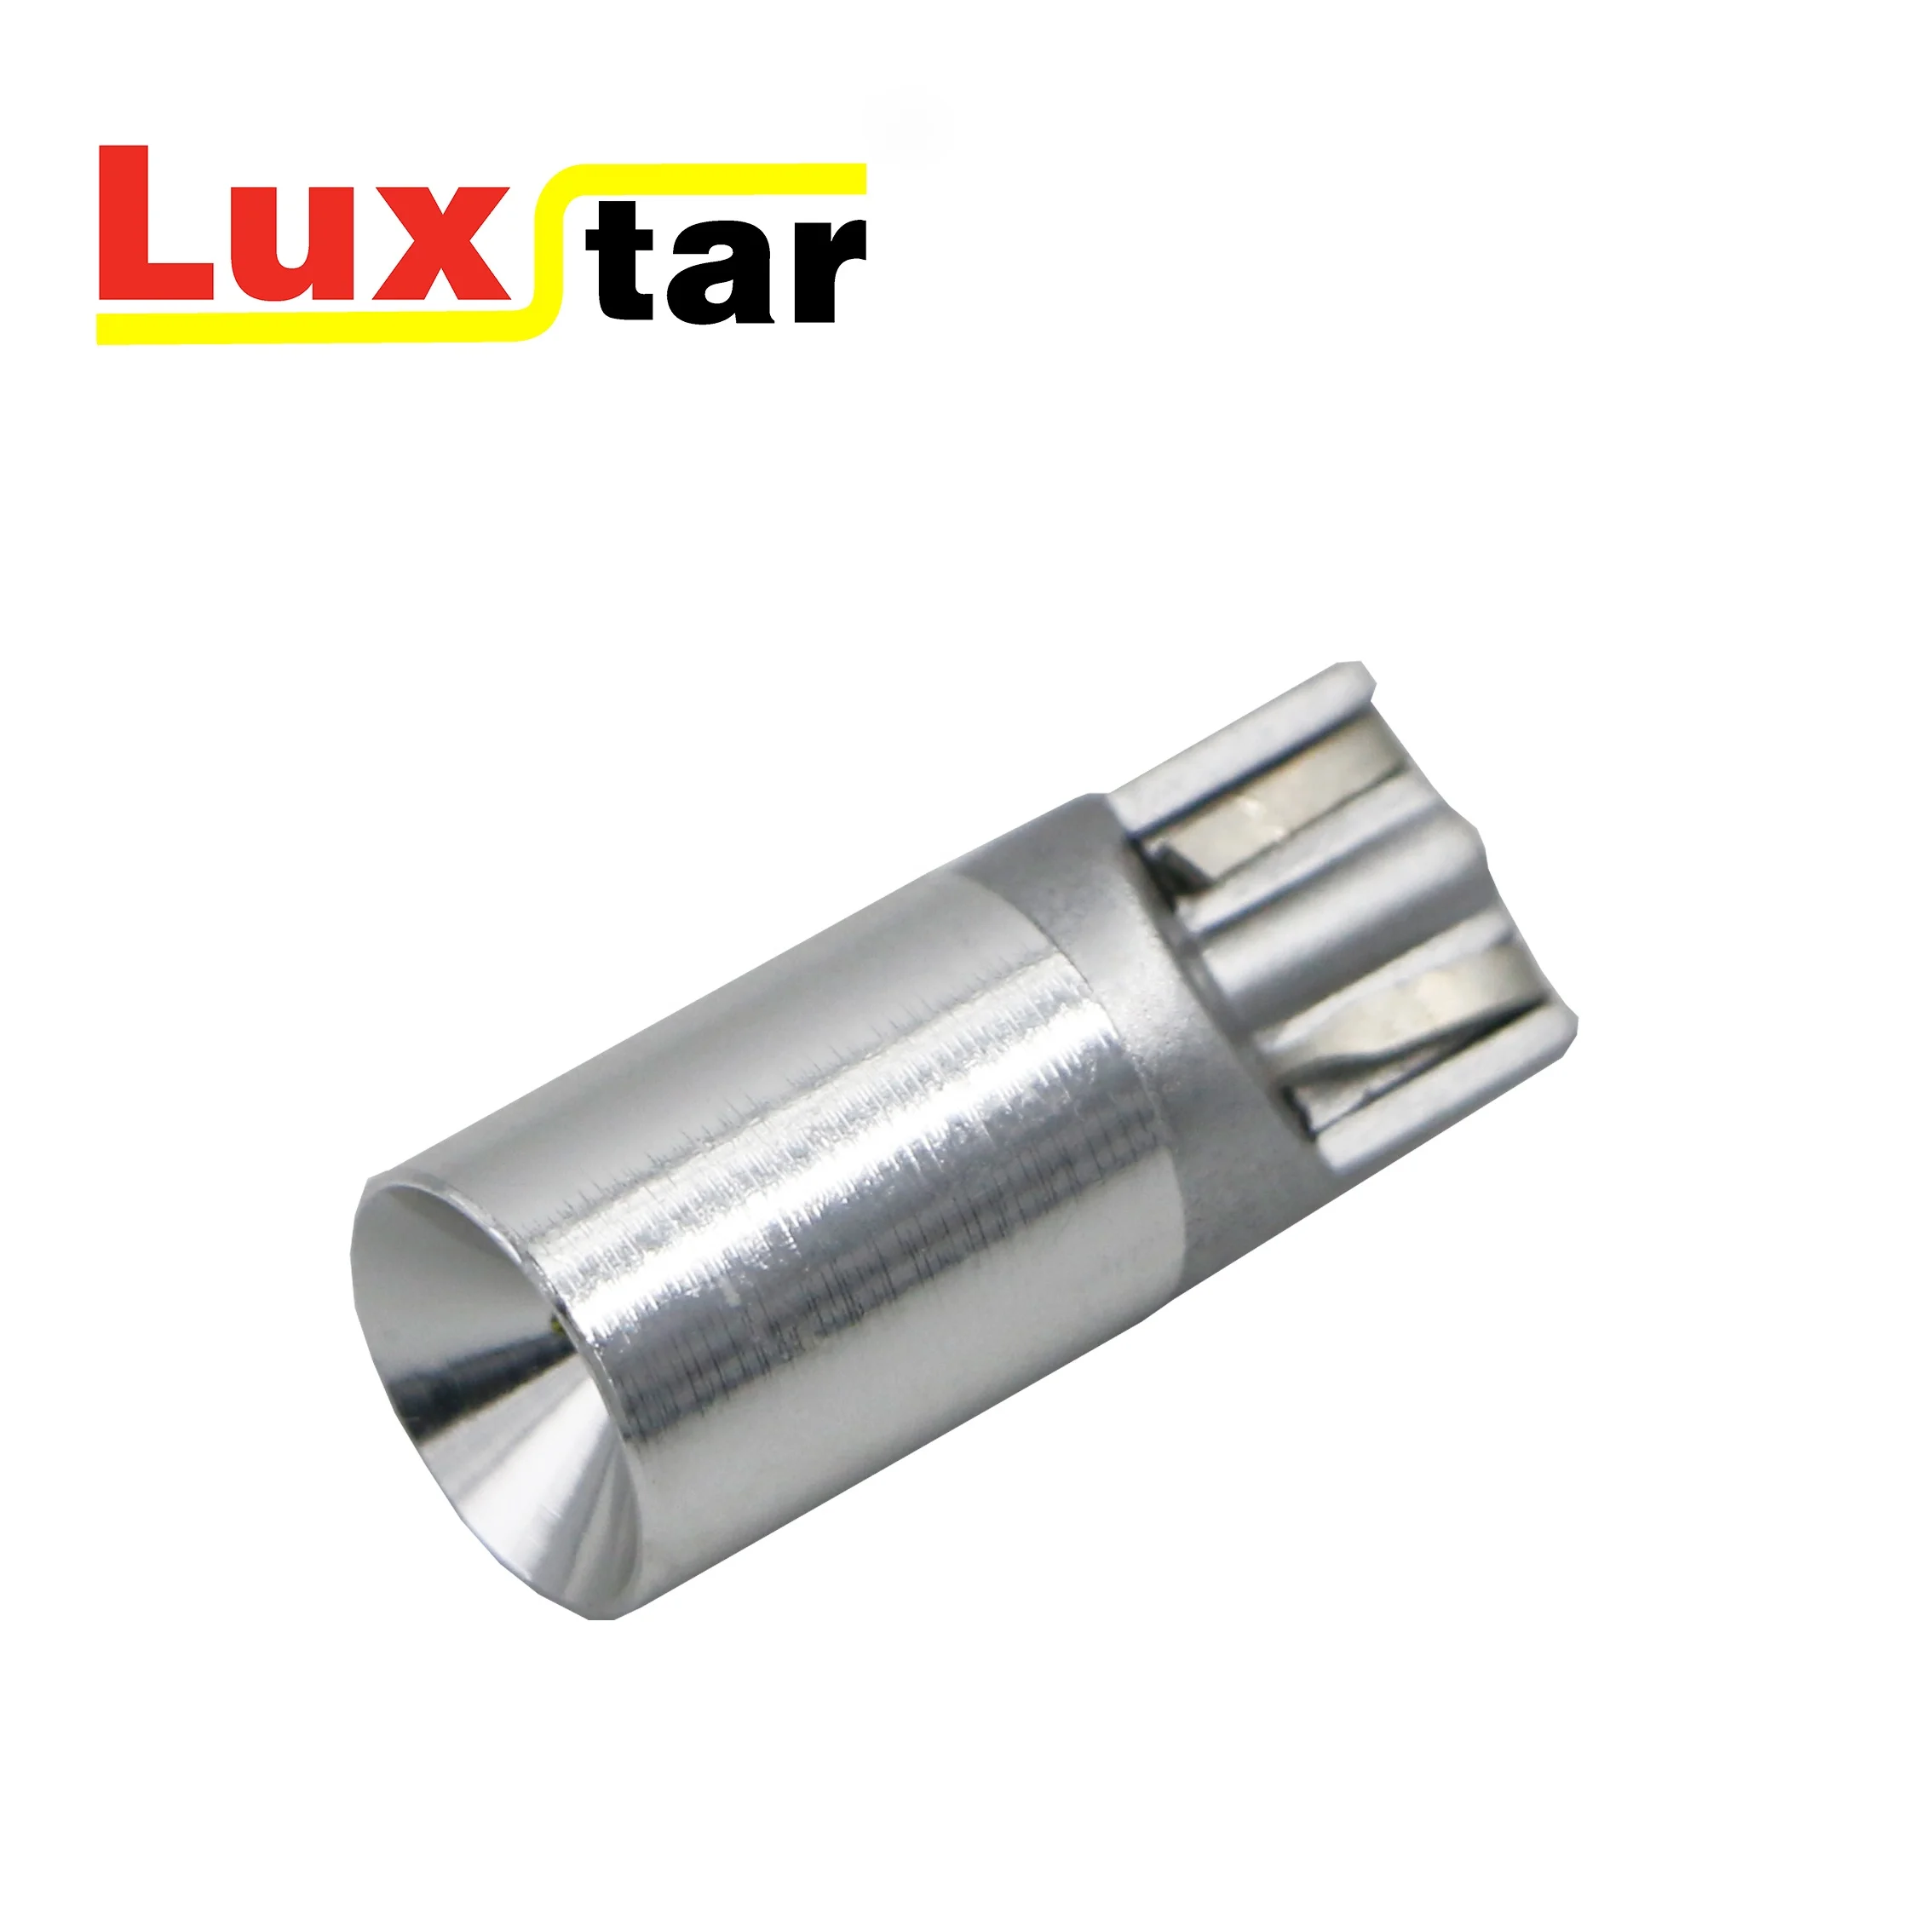 luxstar T10 crees 1smd Car Led  lights W5W 501 194 168 Error Free car Bulbs Light Lamp parking  clearance bulb